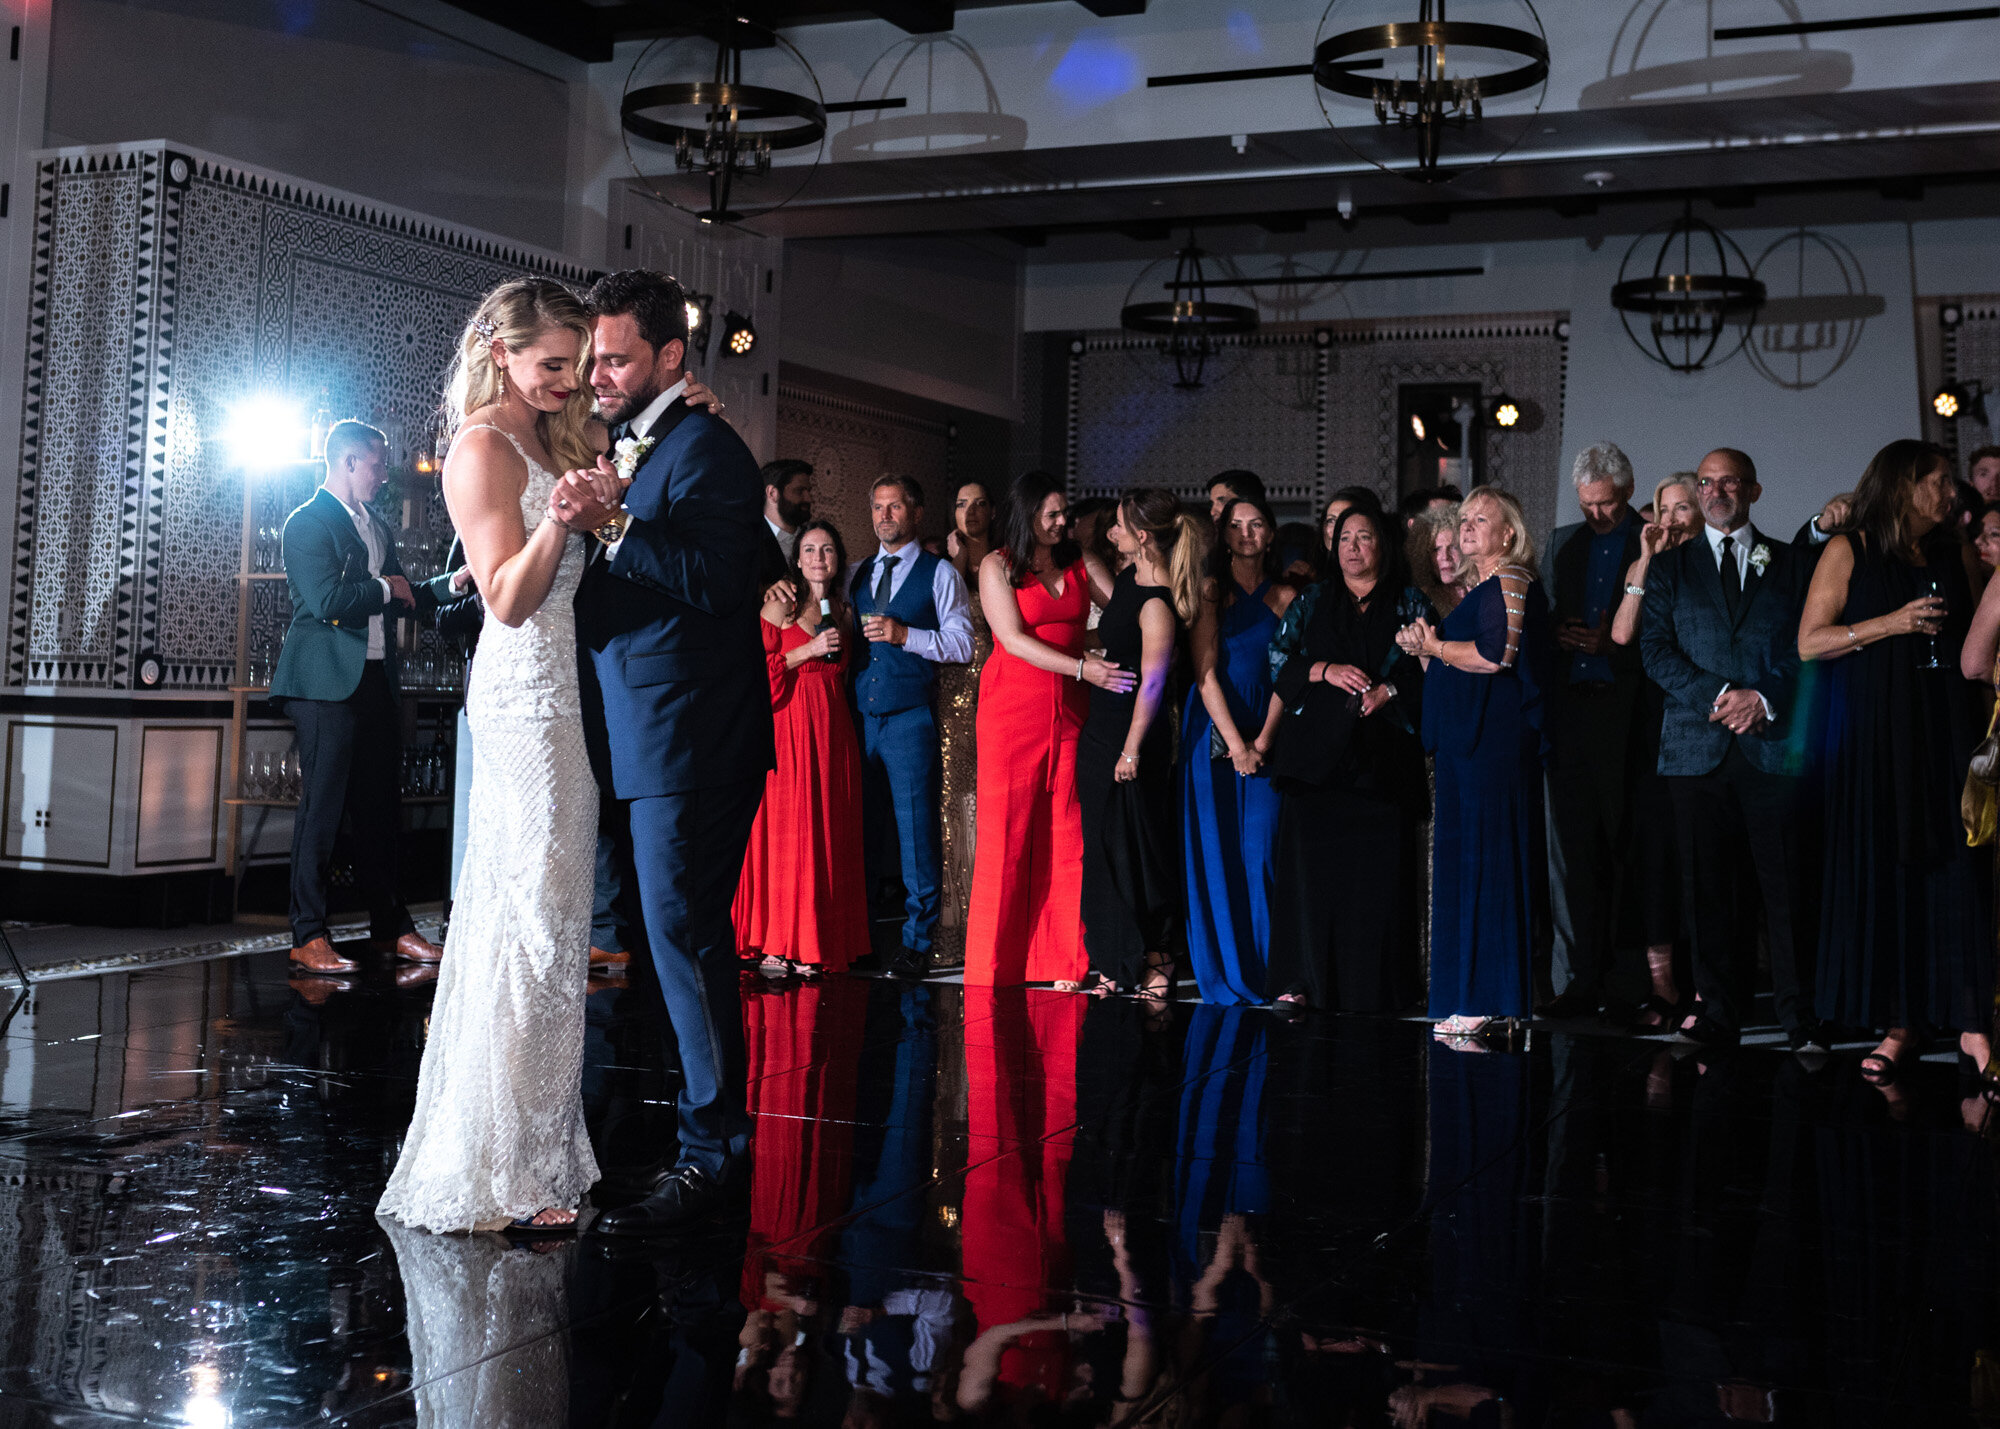 wedding-photography-timeline-denver-colorado-reception-first-dance-toast (5).jpg